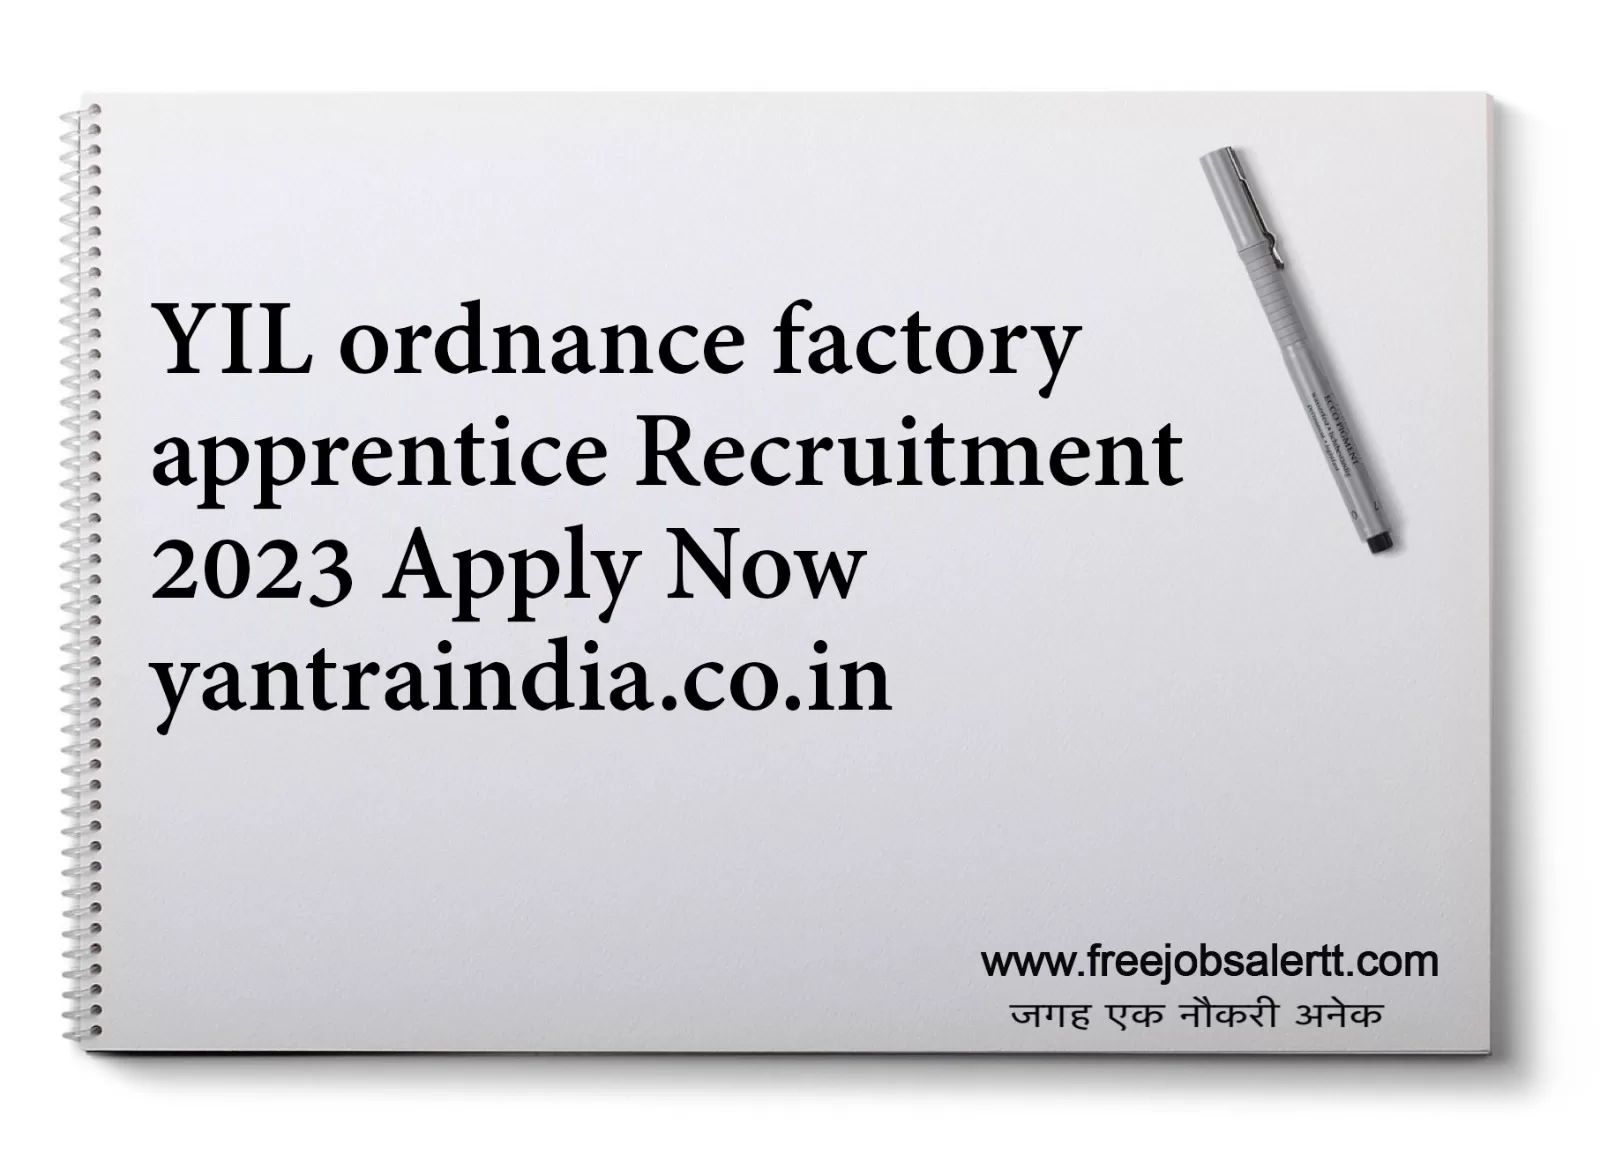 YIL ordnance factory apprentice Recruitment 2023